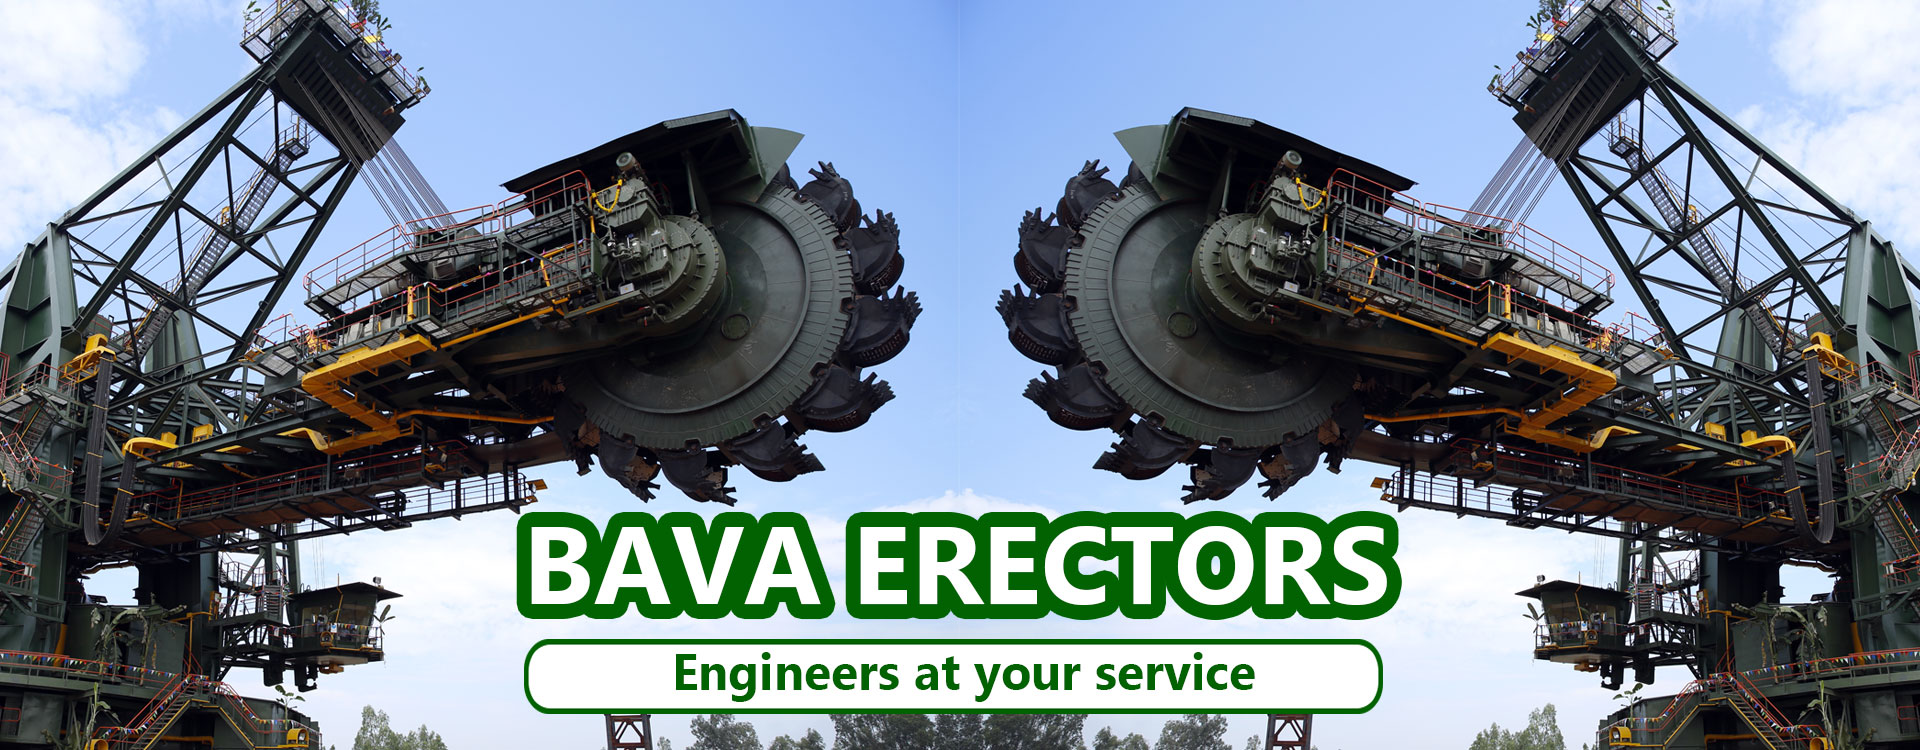 Bava Erectors and Engineering Work | Neyveli | Chennai | India